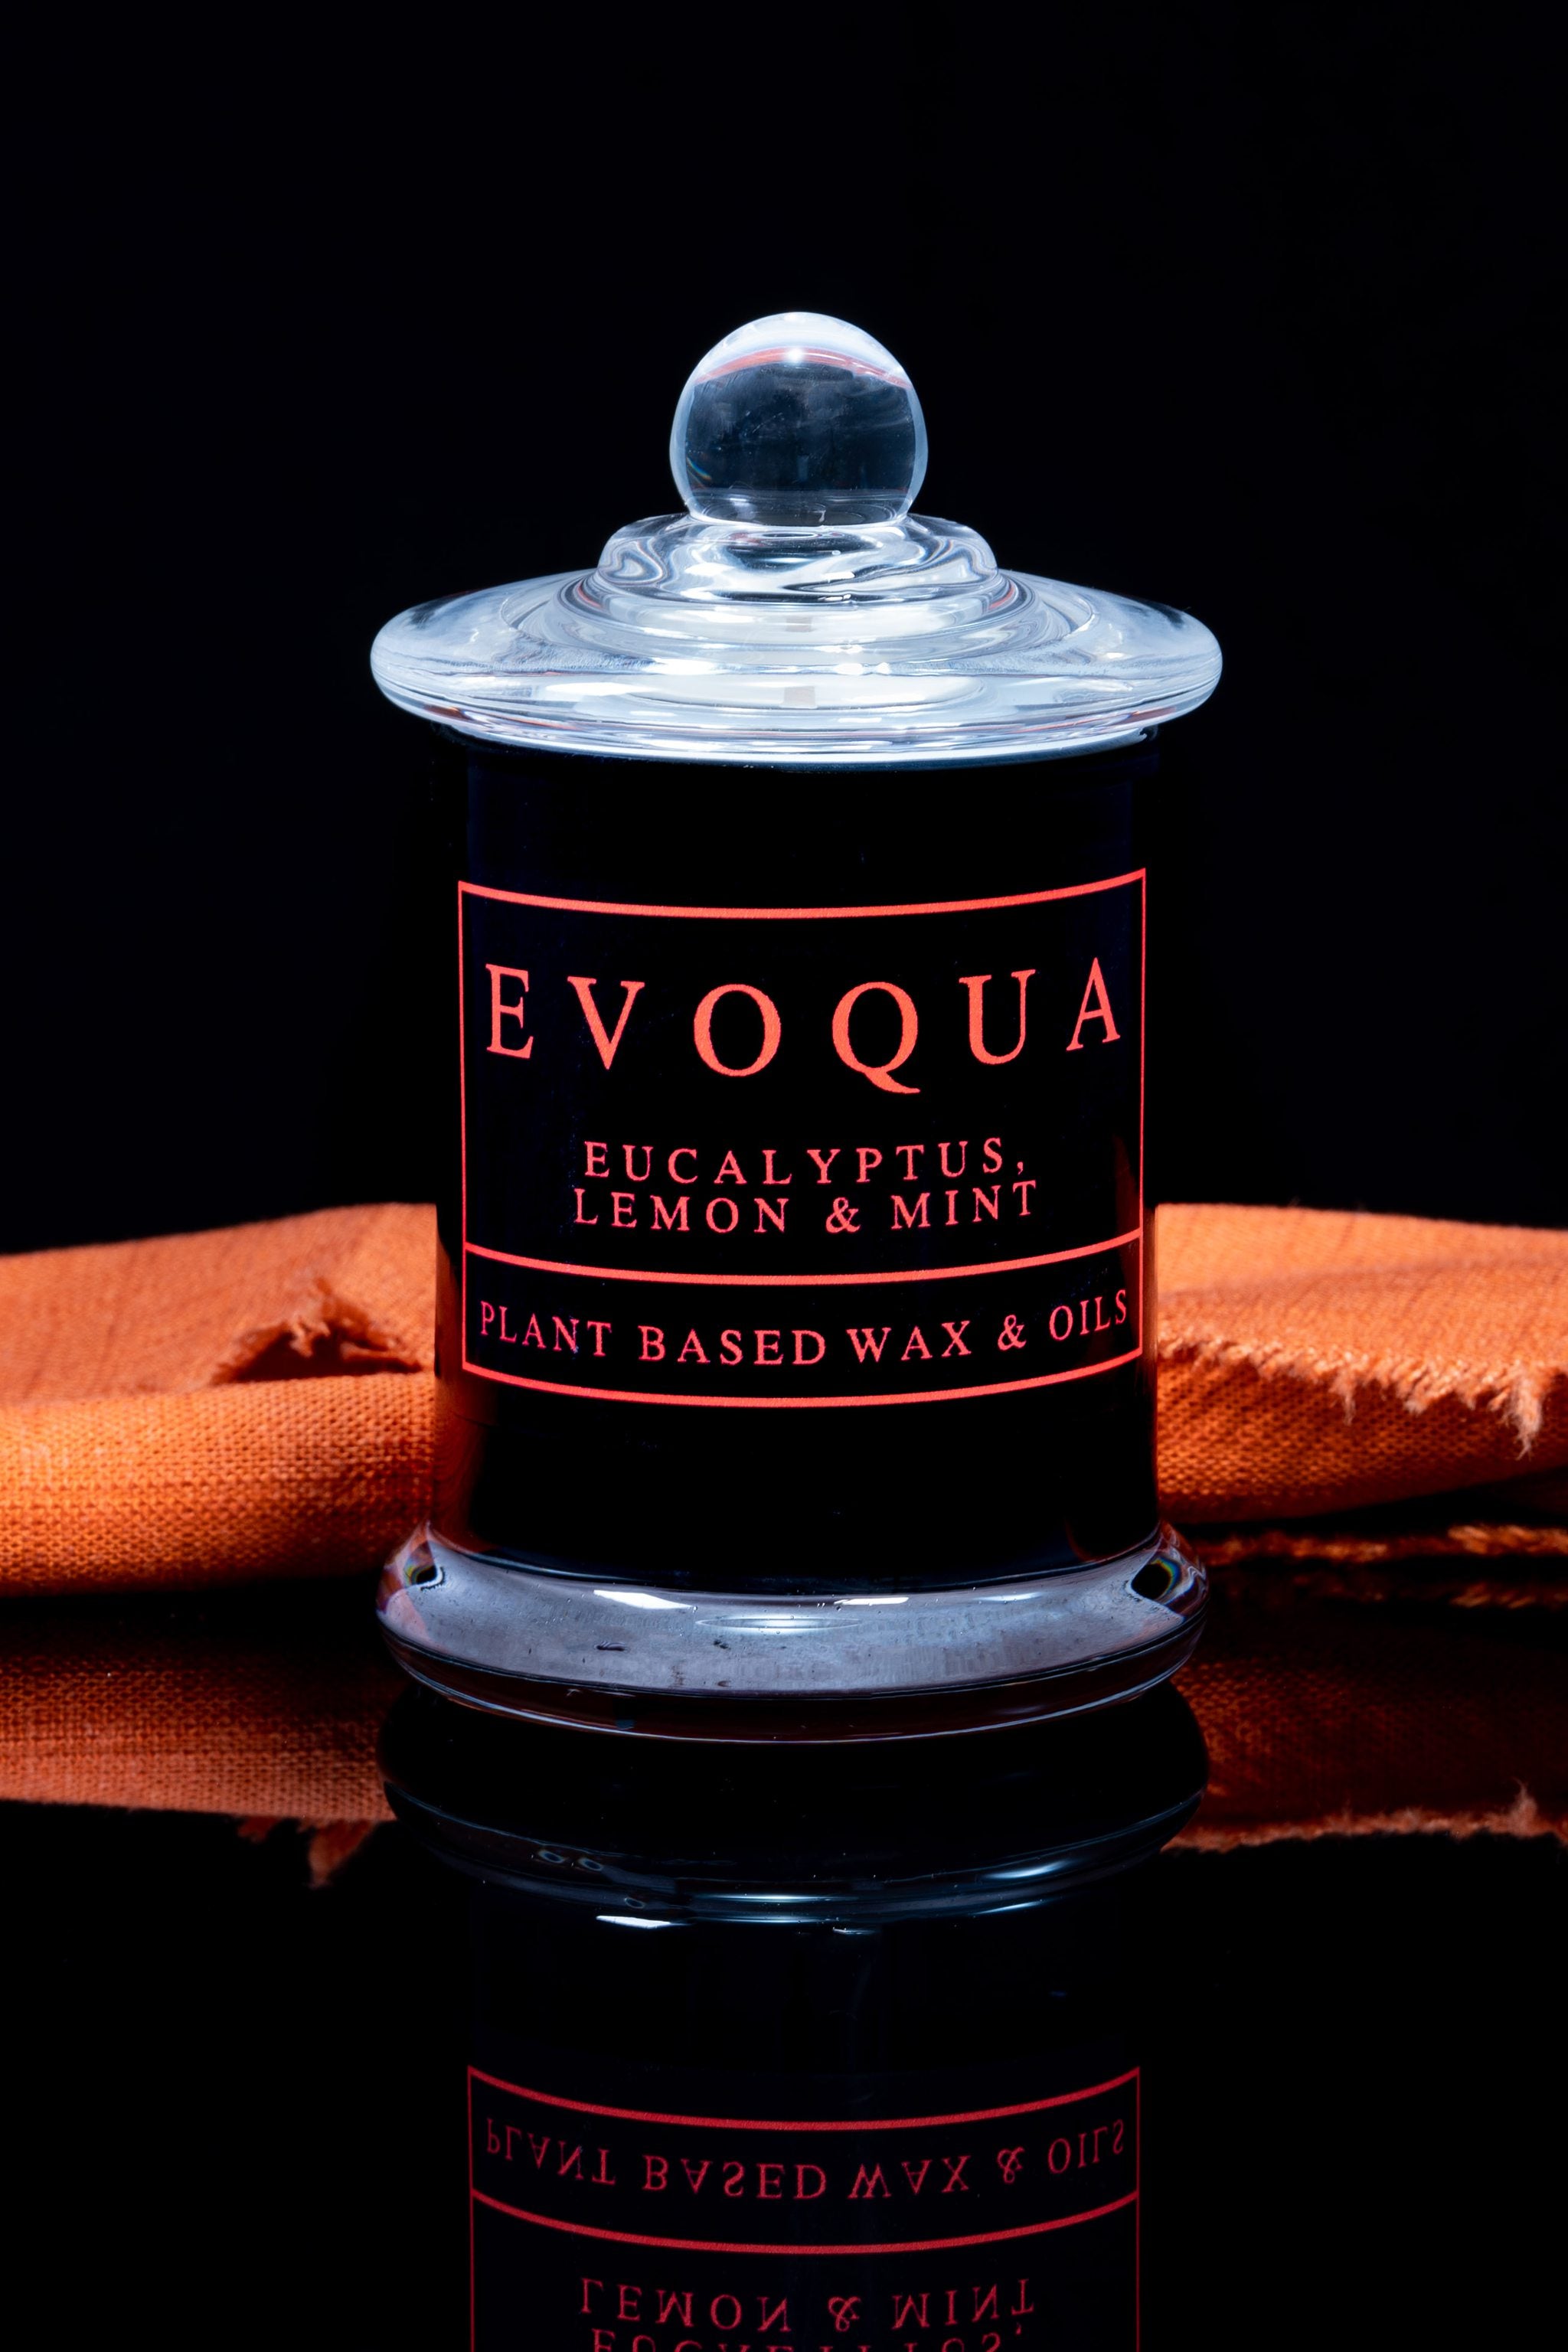 Evoqua 3 Piece Scented Candle Gift Set - Ginger Lily, Ylang-Ylang / Eucalyptus, Lemon, Mint / Mandarin, Grapefruit, Sage, Mint